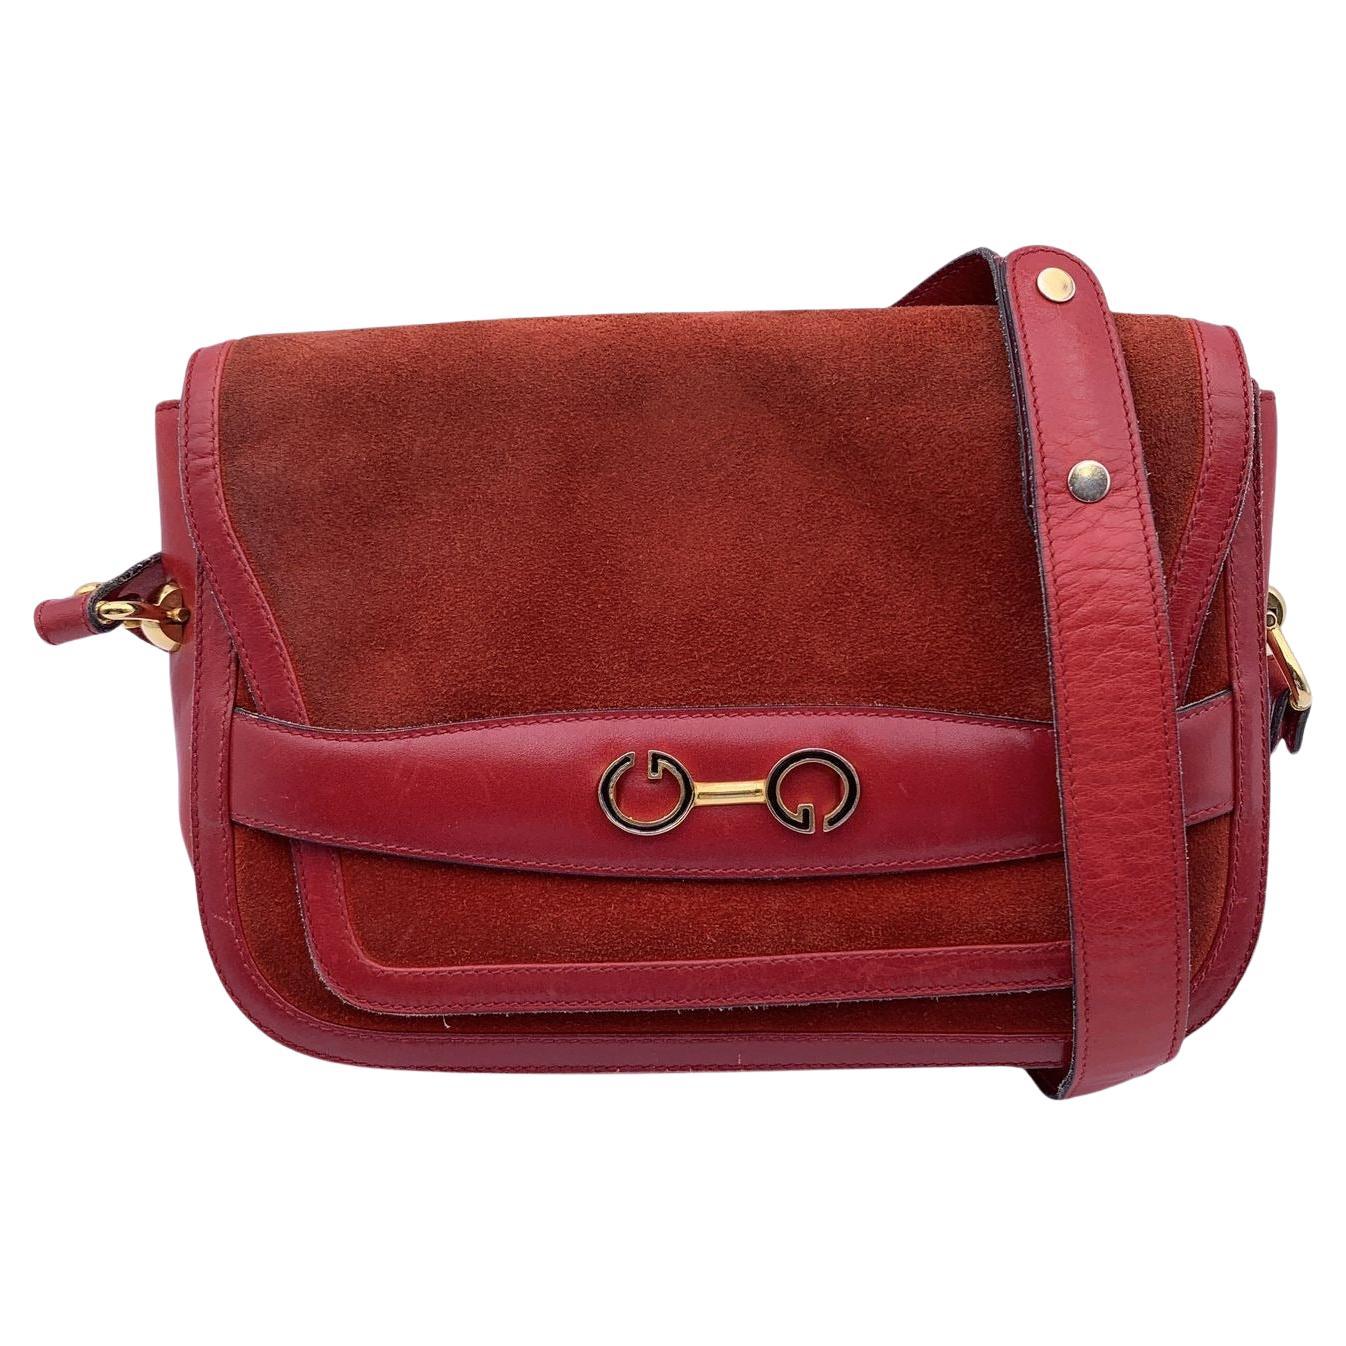 Gucci Vintage Red Suede and Leather Flap Shoulder Bag For Sale